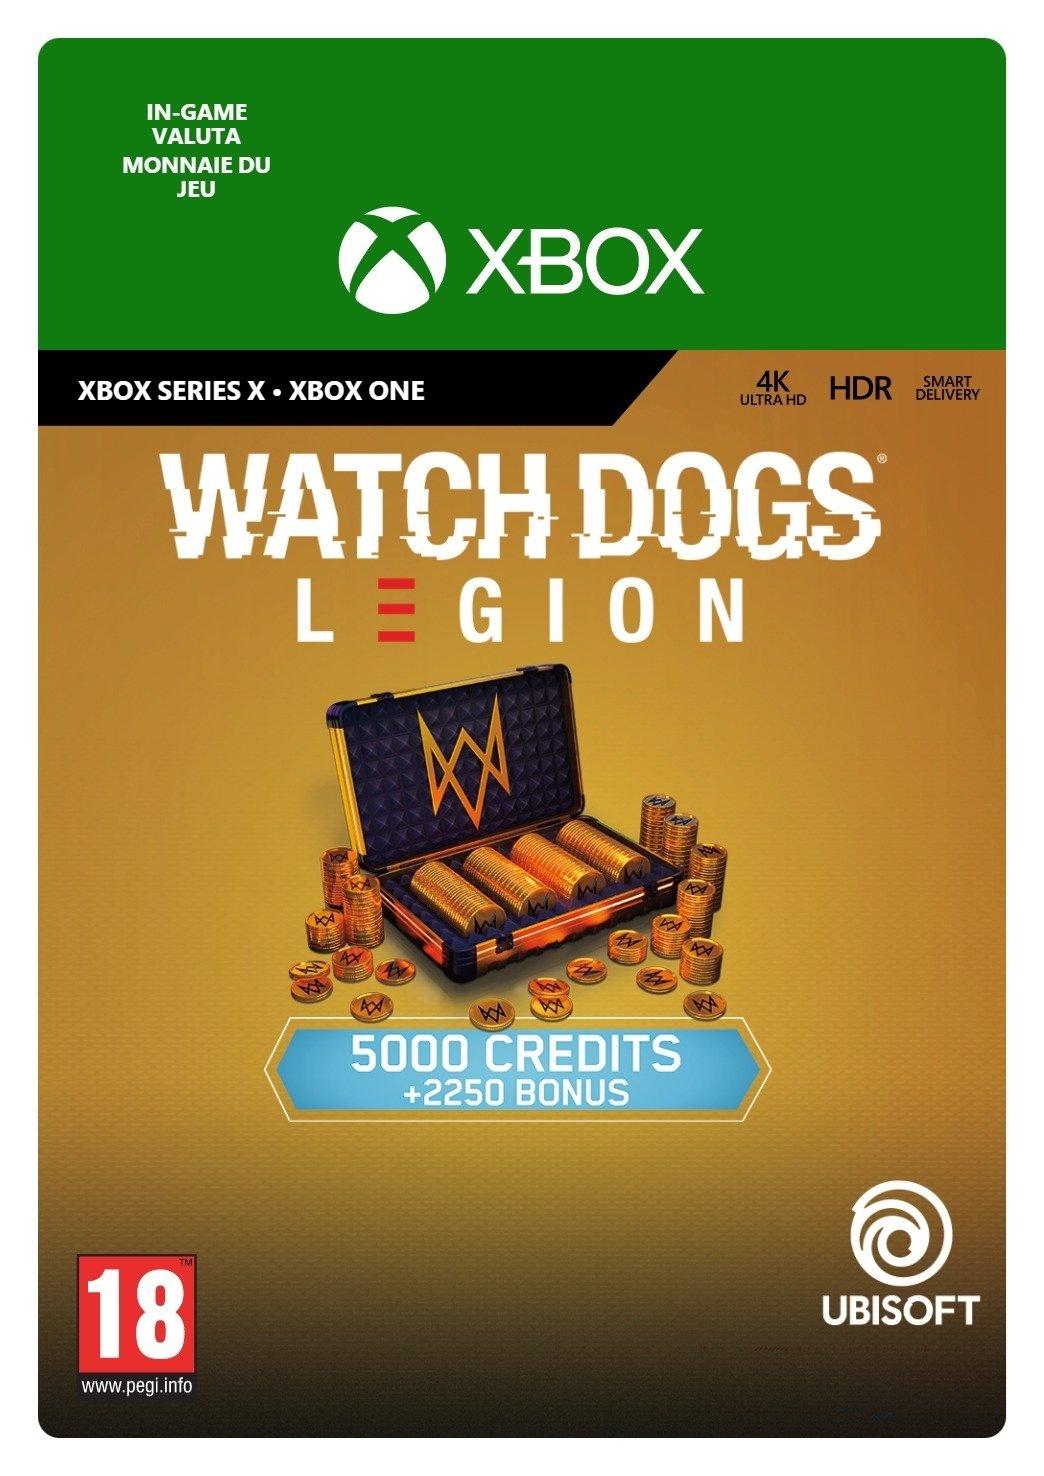 Watch Dogs Legion 7.250 WD Credits - Xbox Series X/Xbox One - Currency | 7F6-00276 (6ed72cc2-d227-594a-ac25-95aed967a8b9)